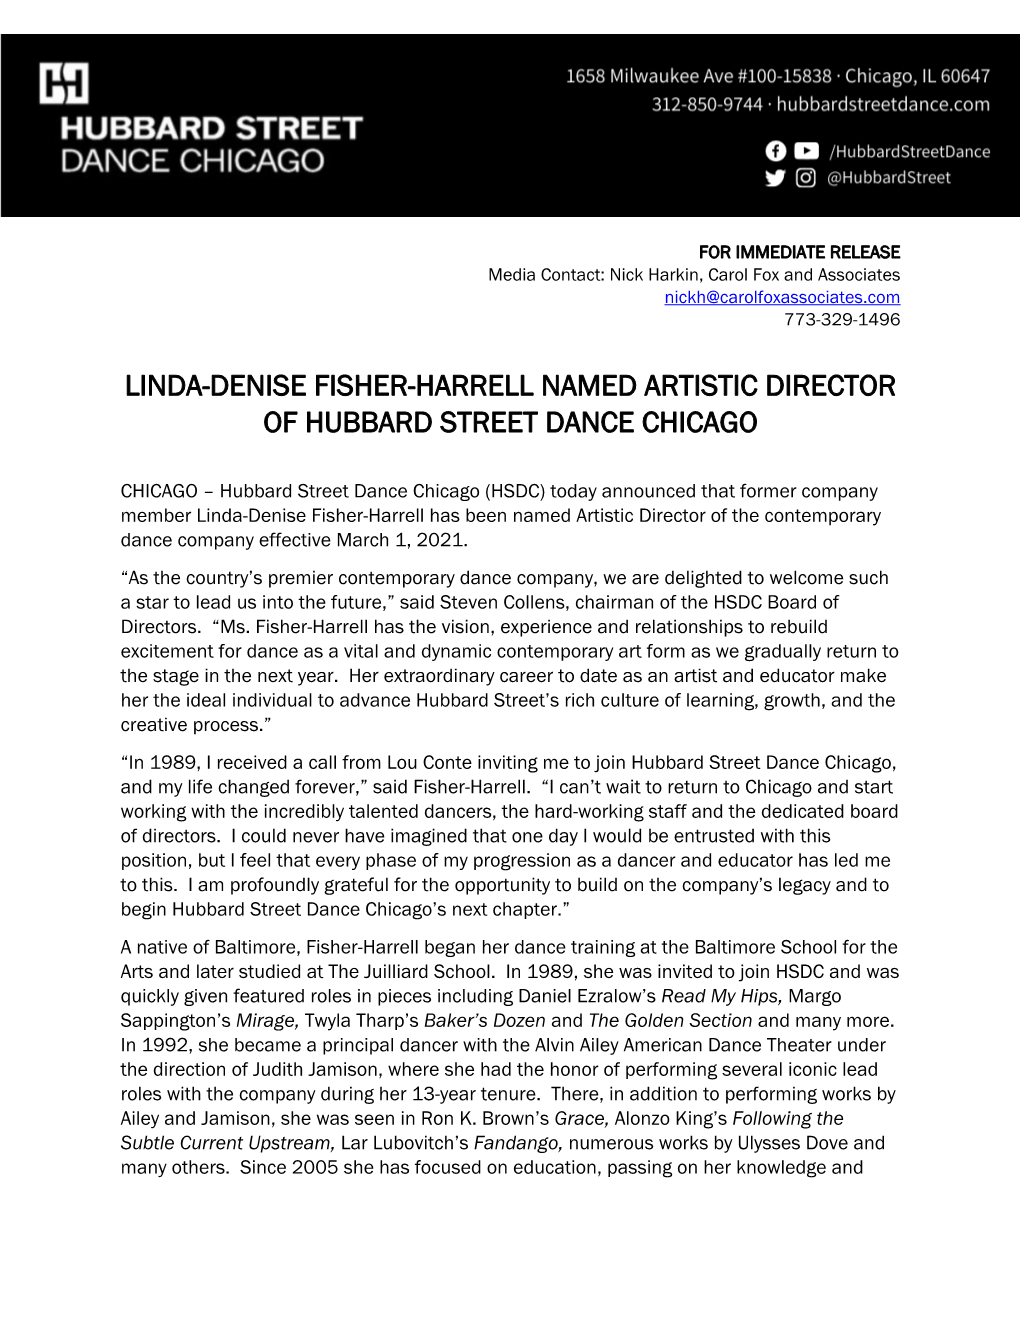 Linda-Denise Fisher-Harrell Named Artistic Director of Hubbard Street Dance Chicago